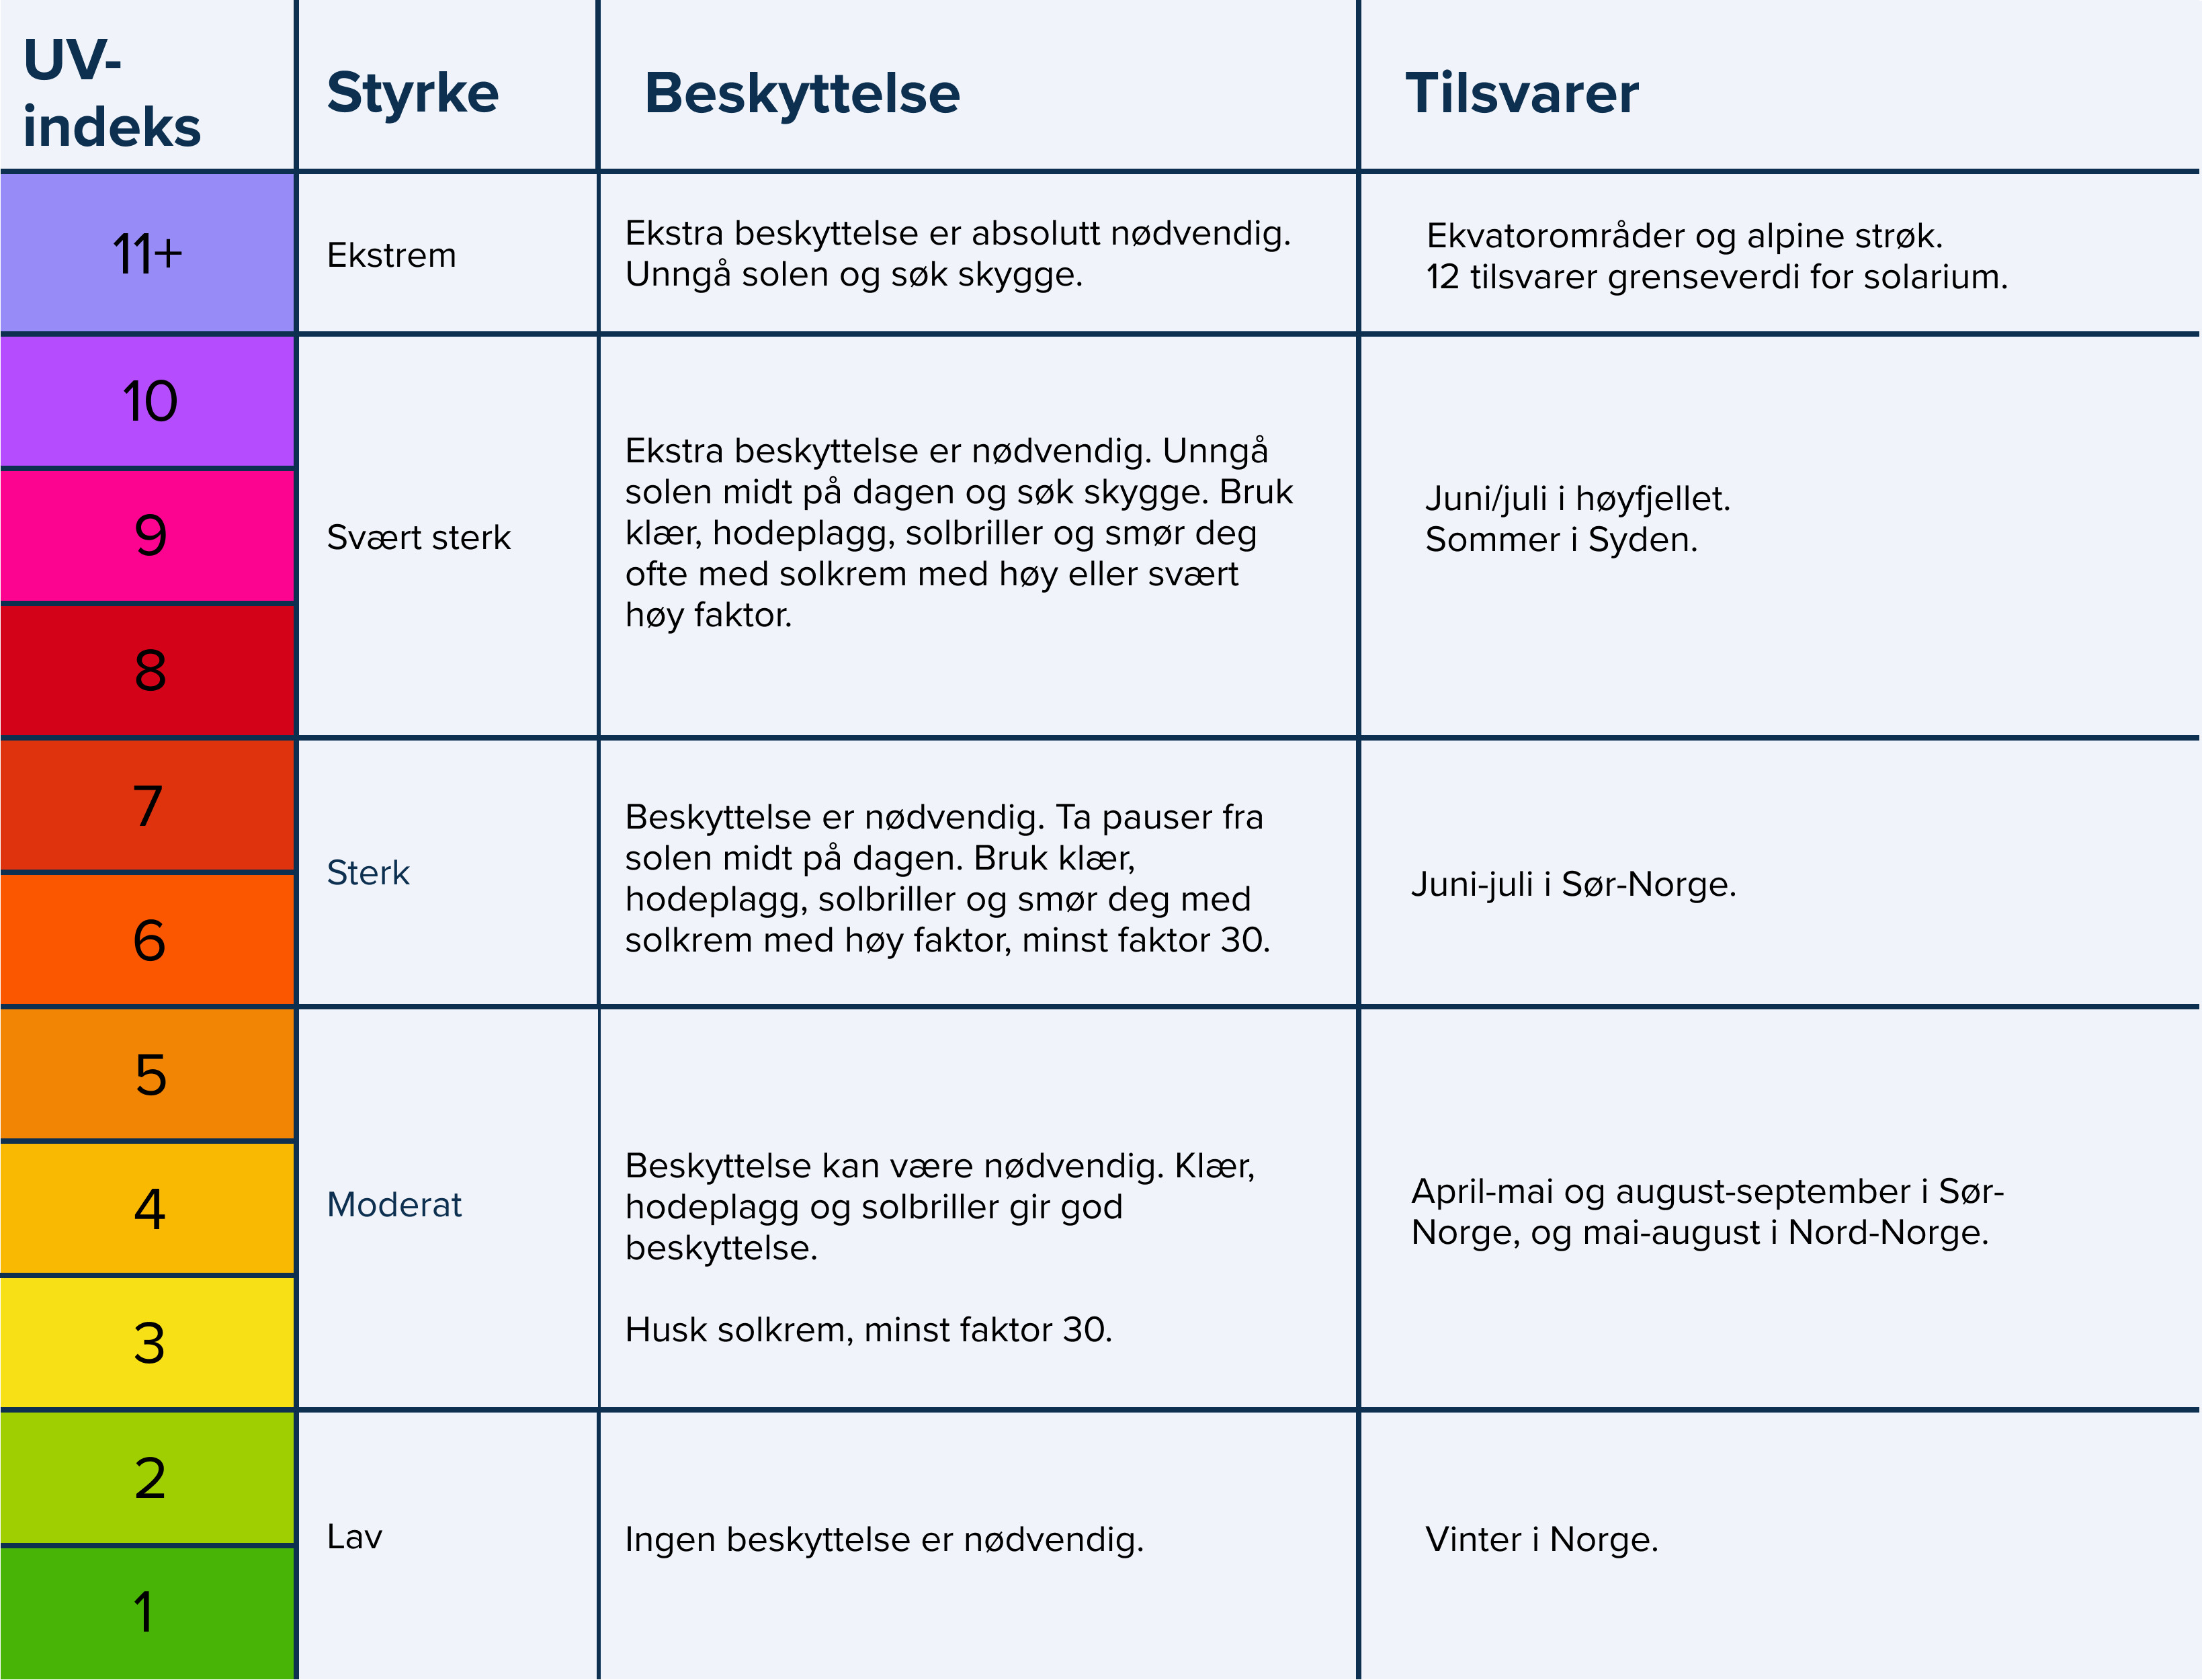 UV-indeks (forklaring i tabell)